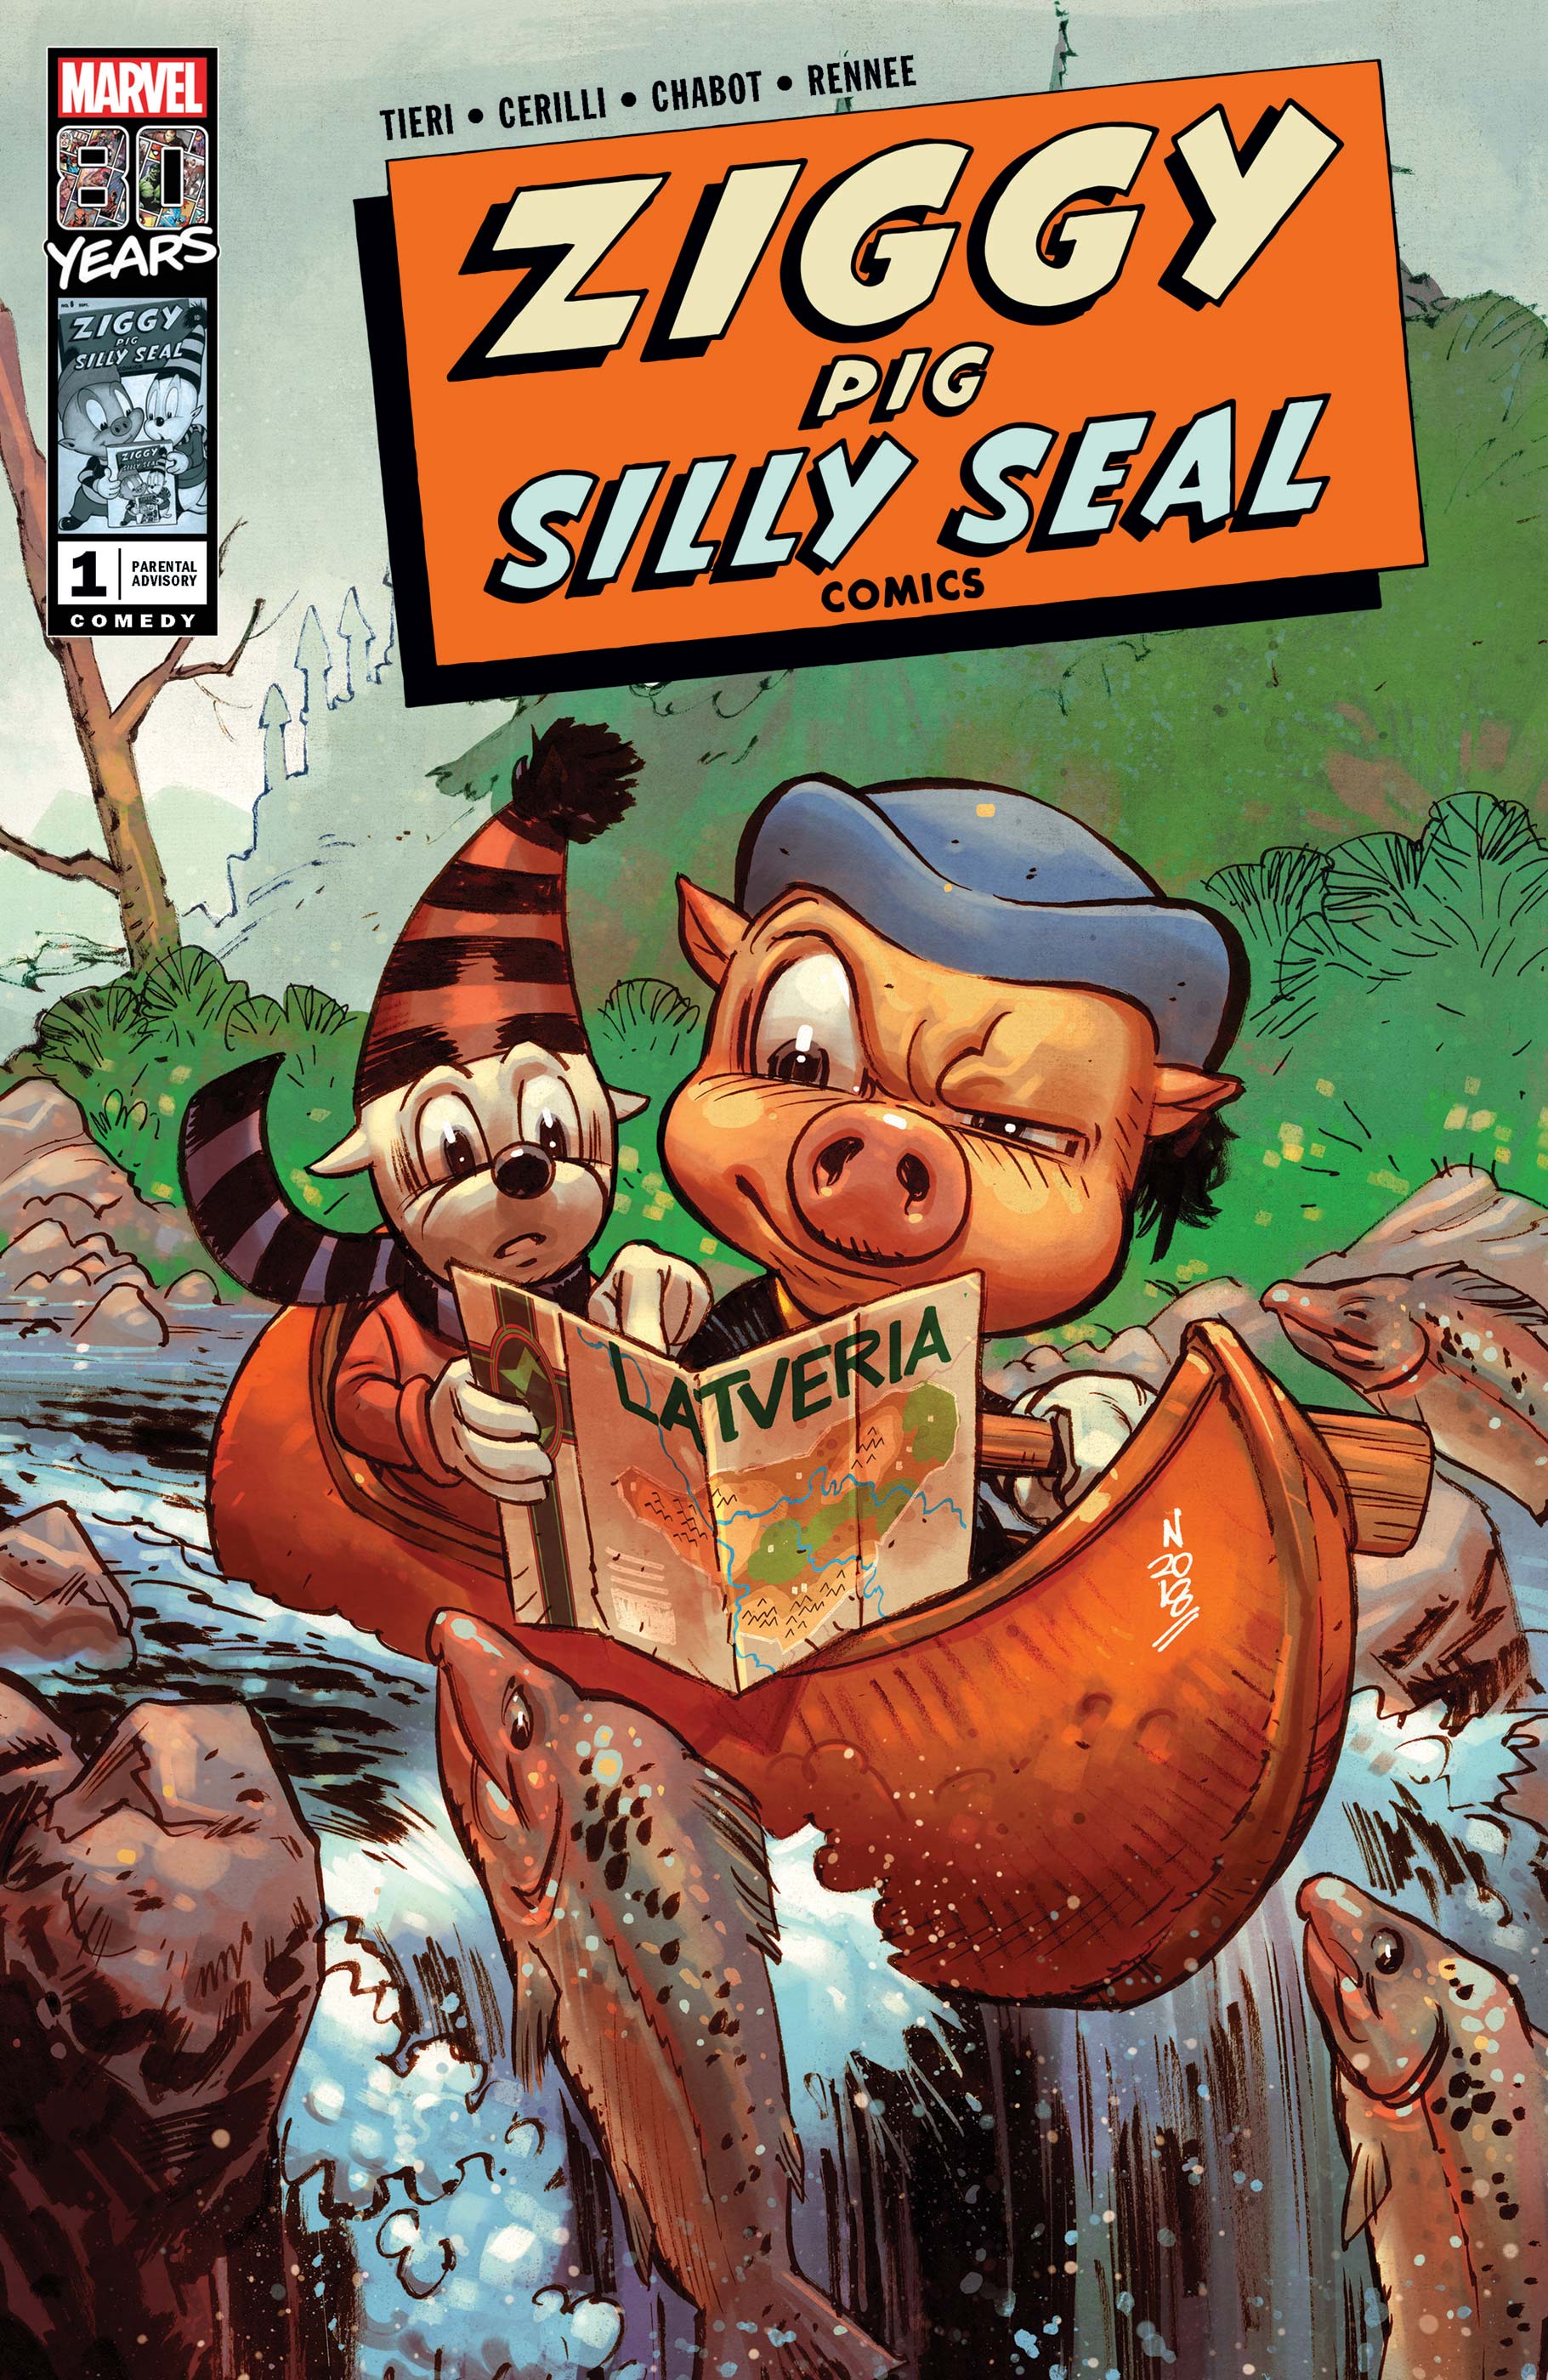 Ziggy Pig - Silly Seal Comics (2019) #1